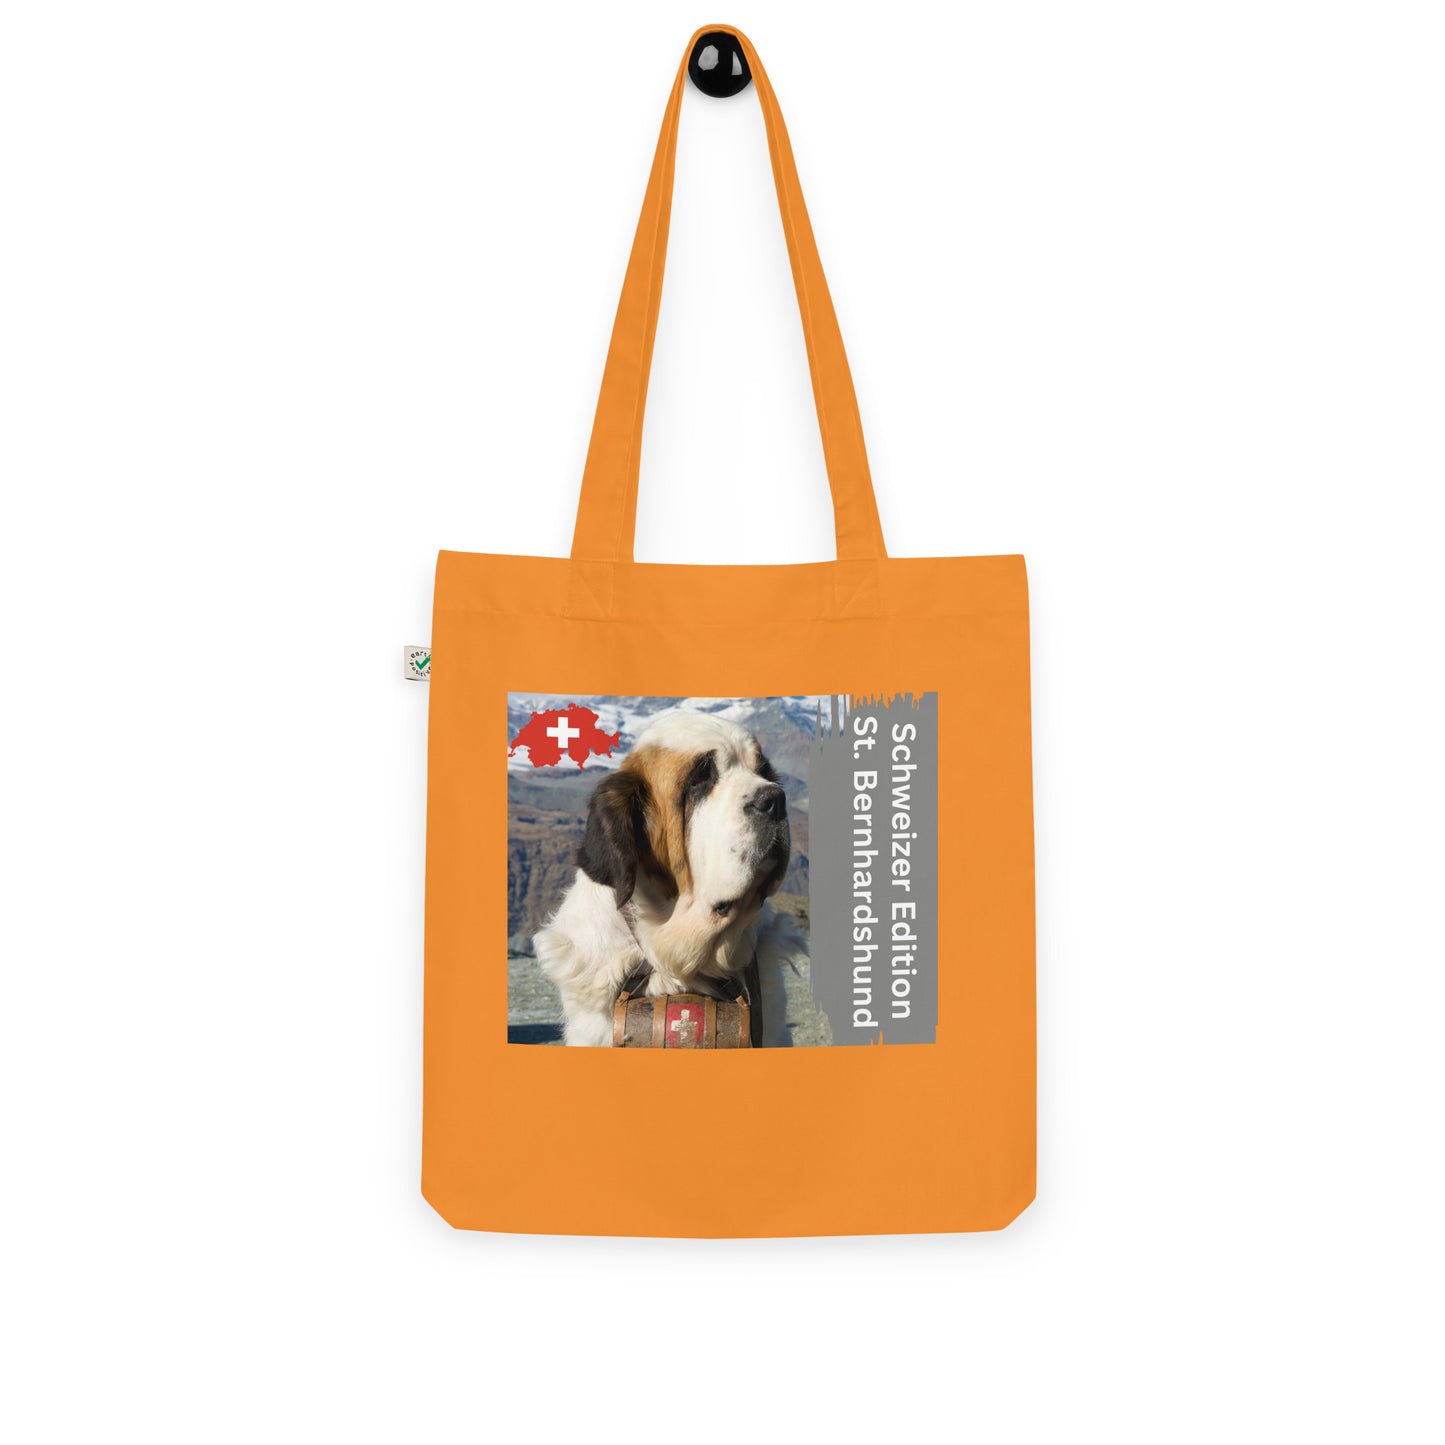 Swiss edition - organic fashion fabric bag